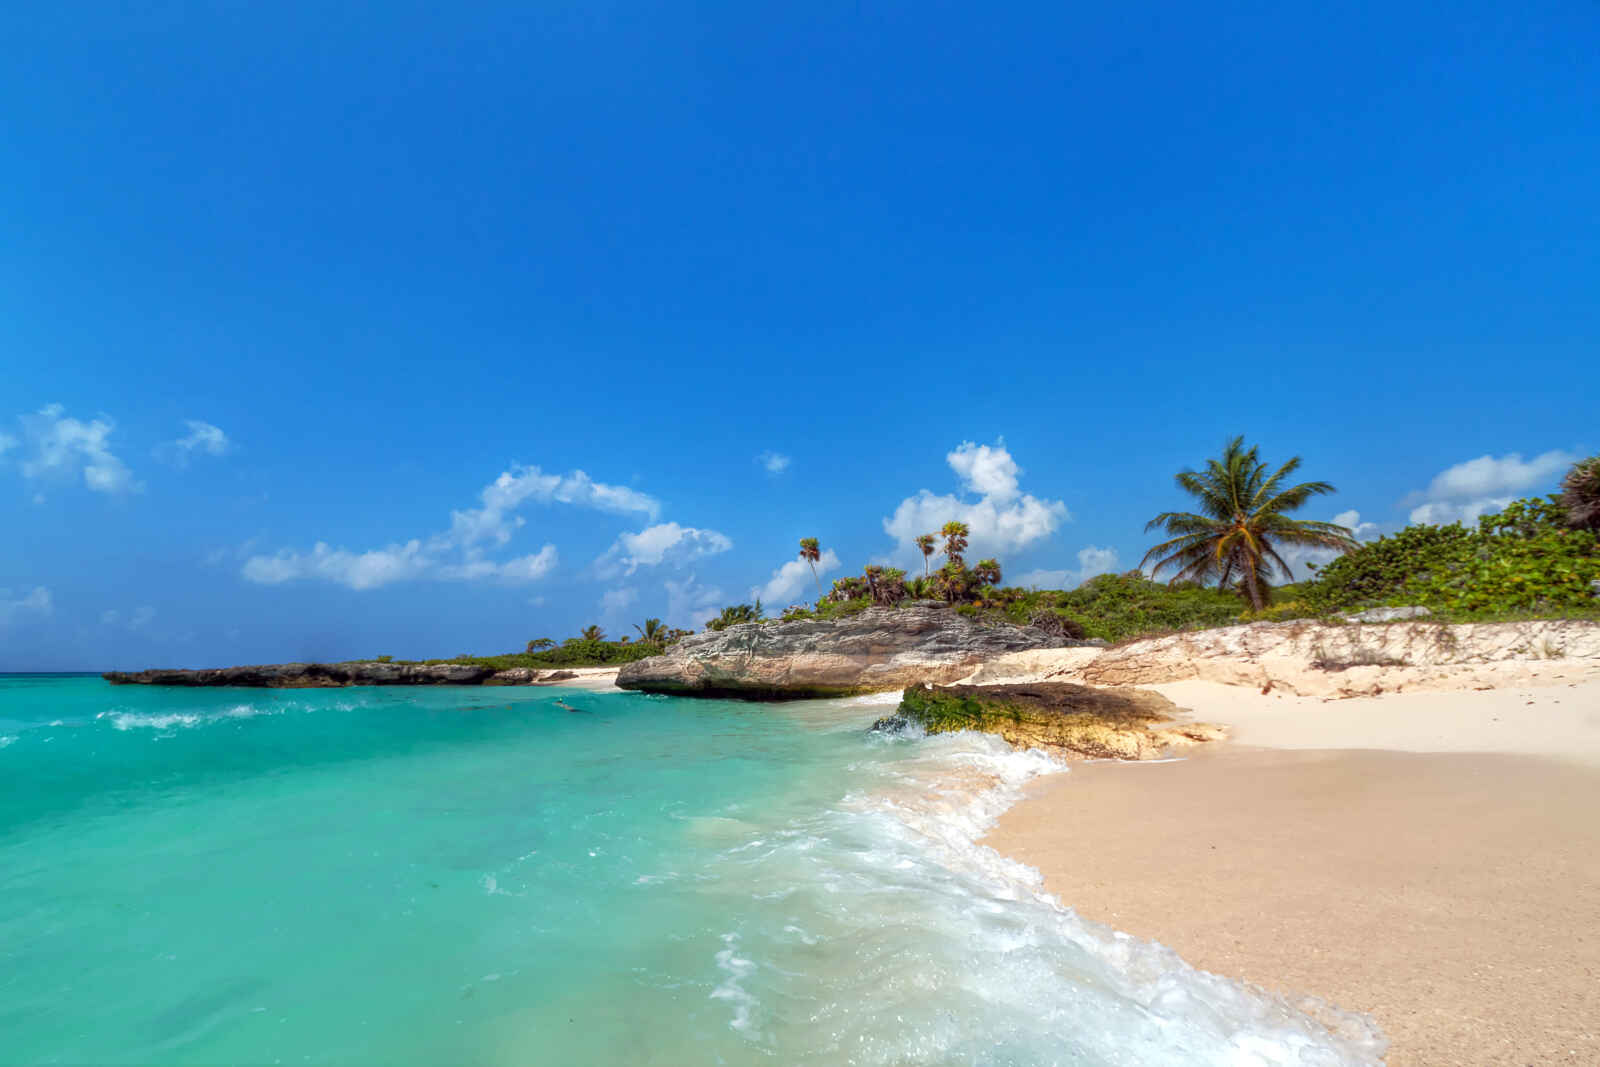 Playa del Carmen, Cancun, Mexico